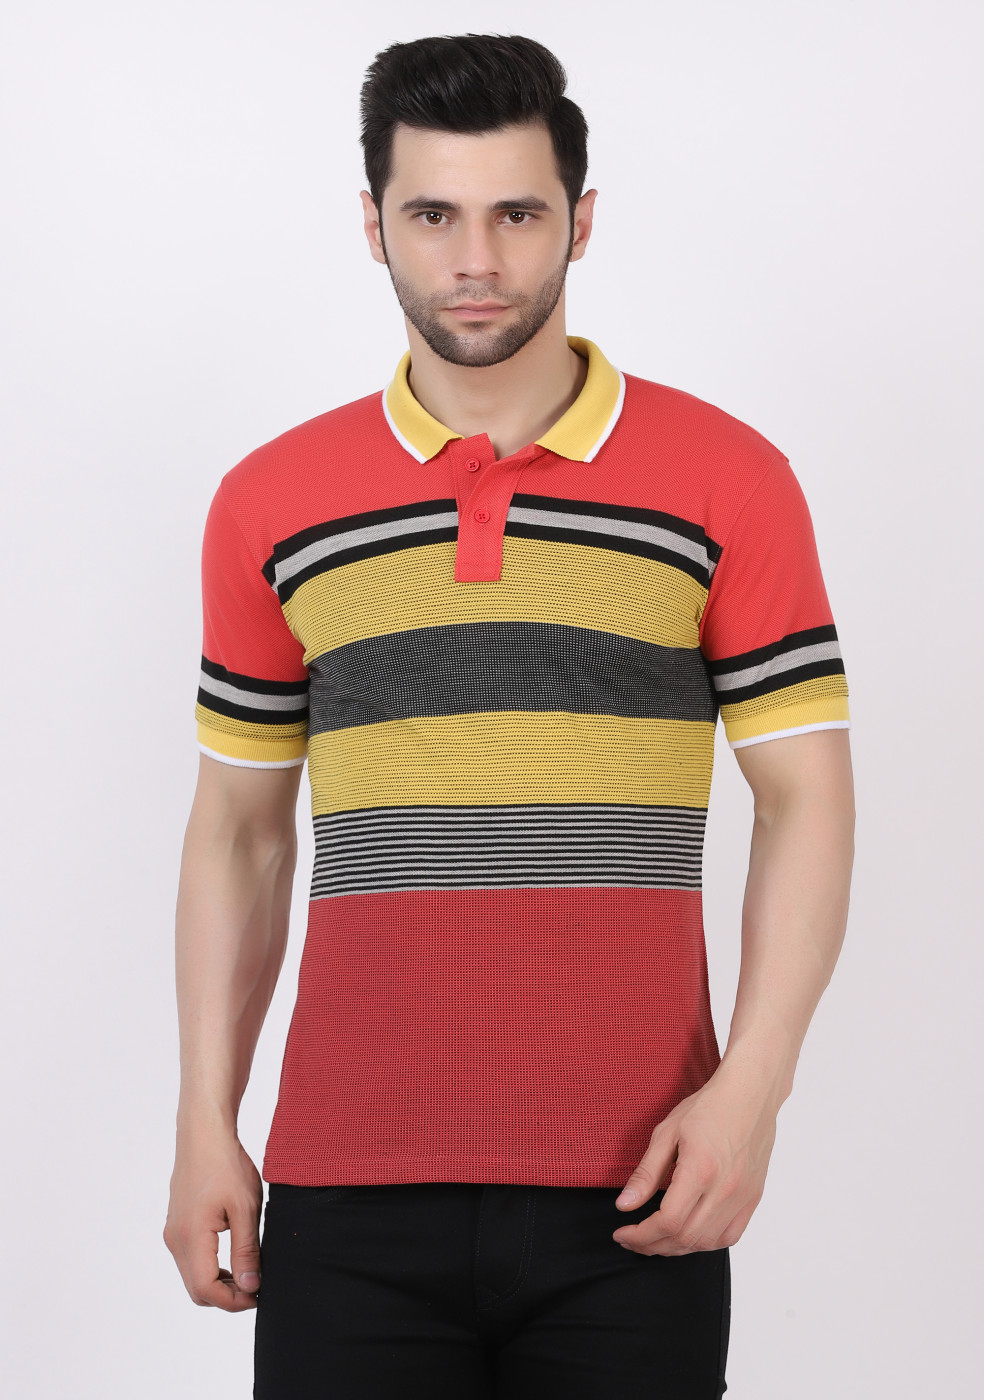 Striped Matty Cotton Collar Polo T-Shirts  For Men